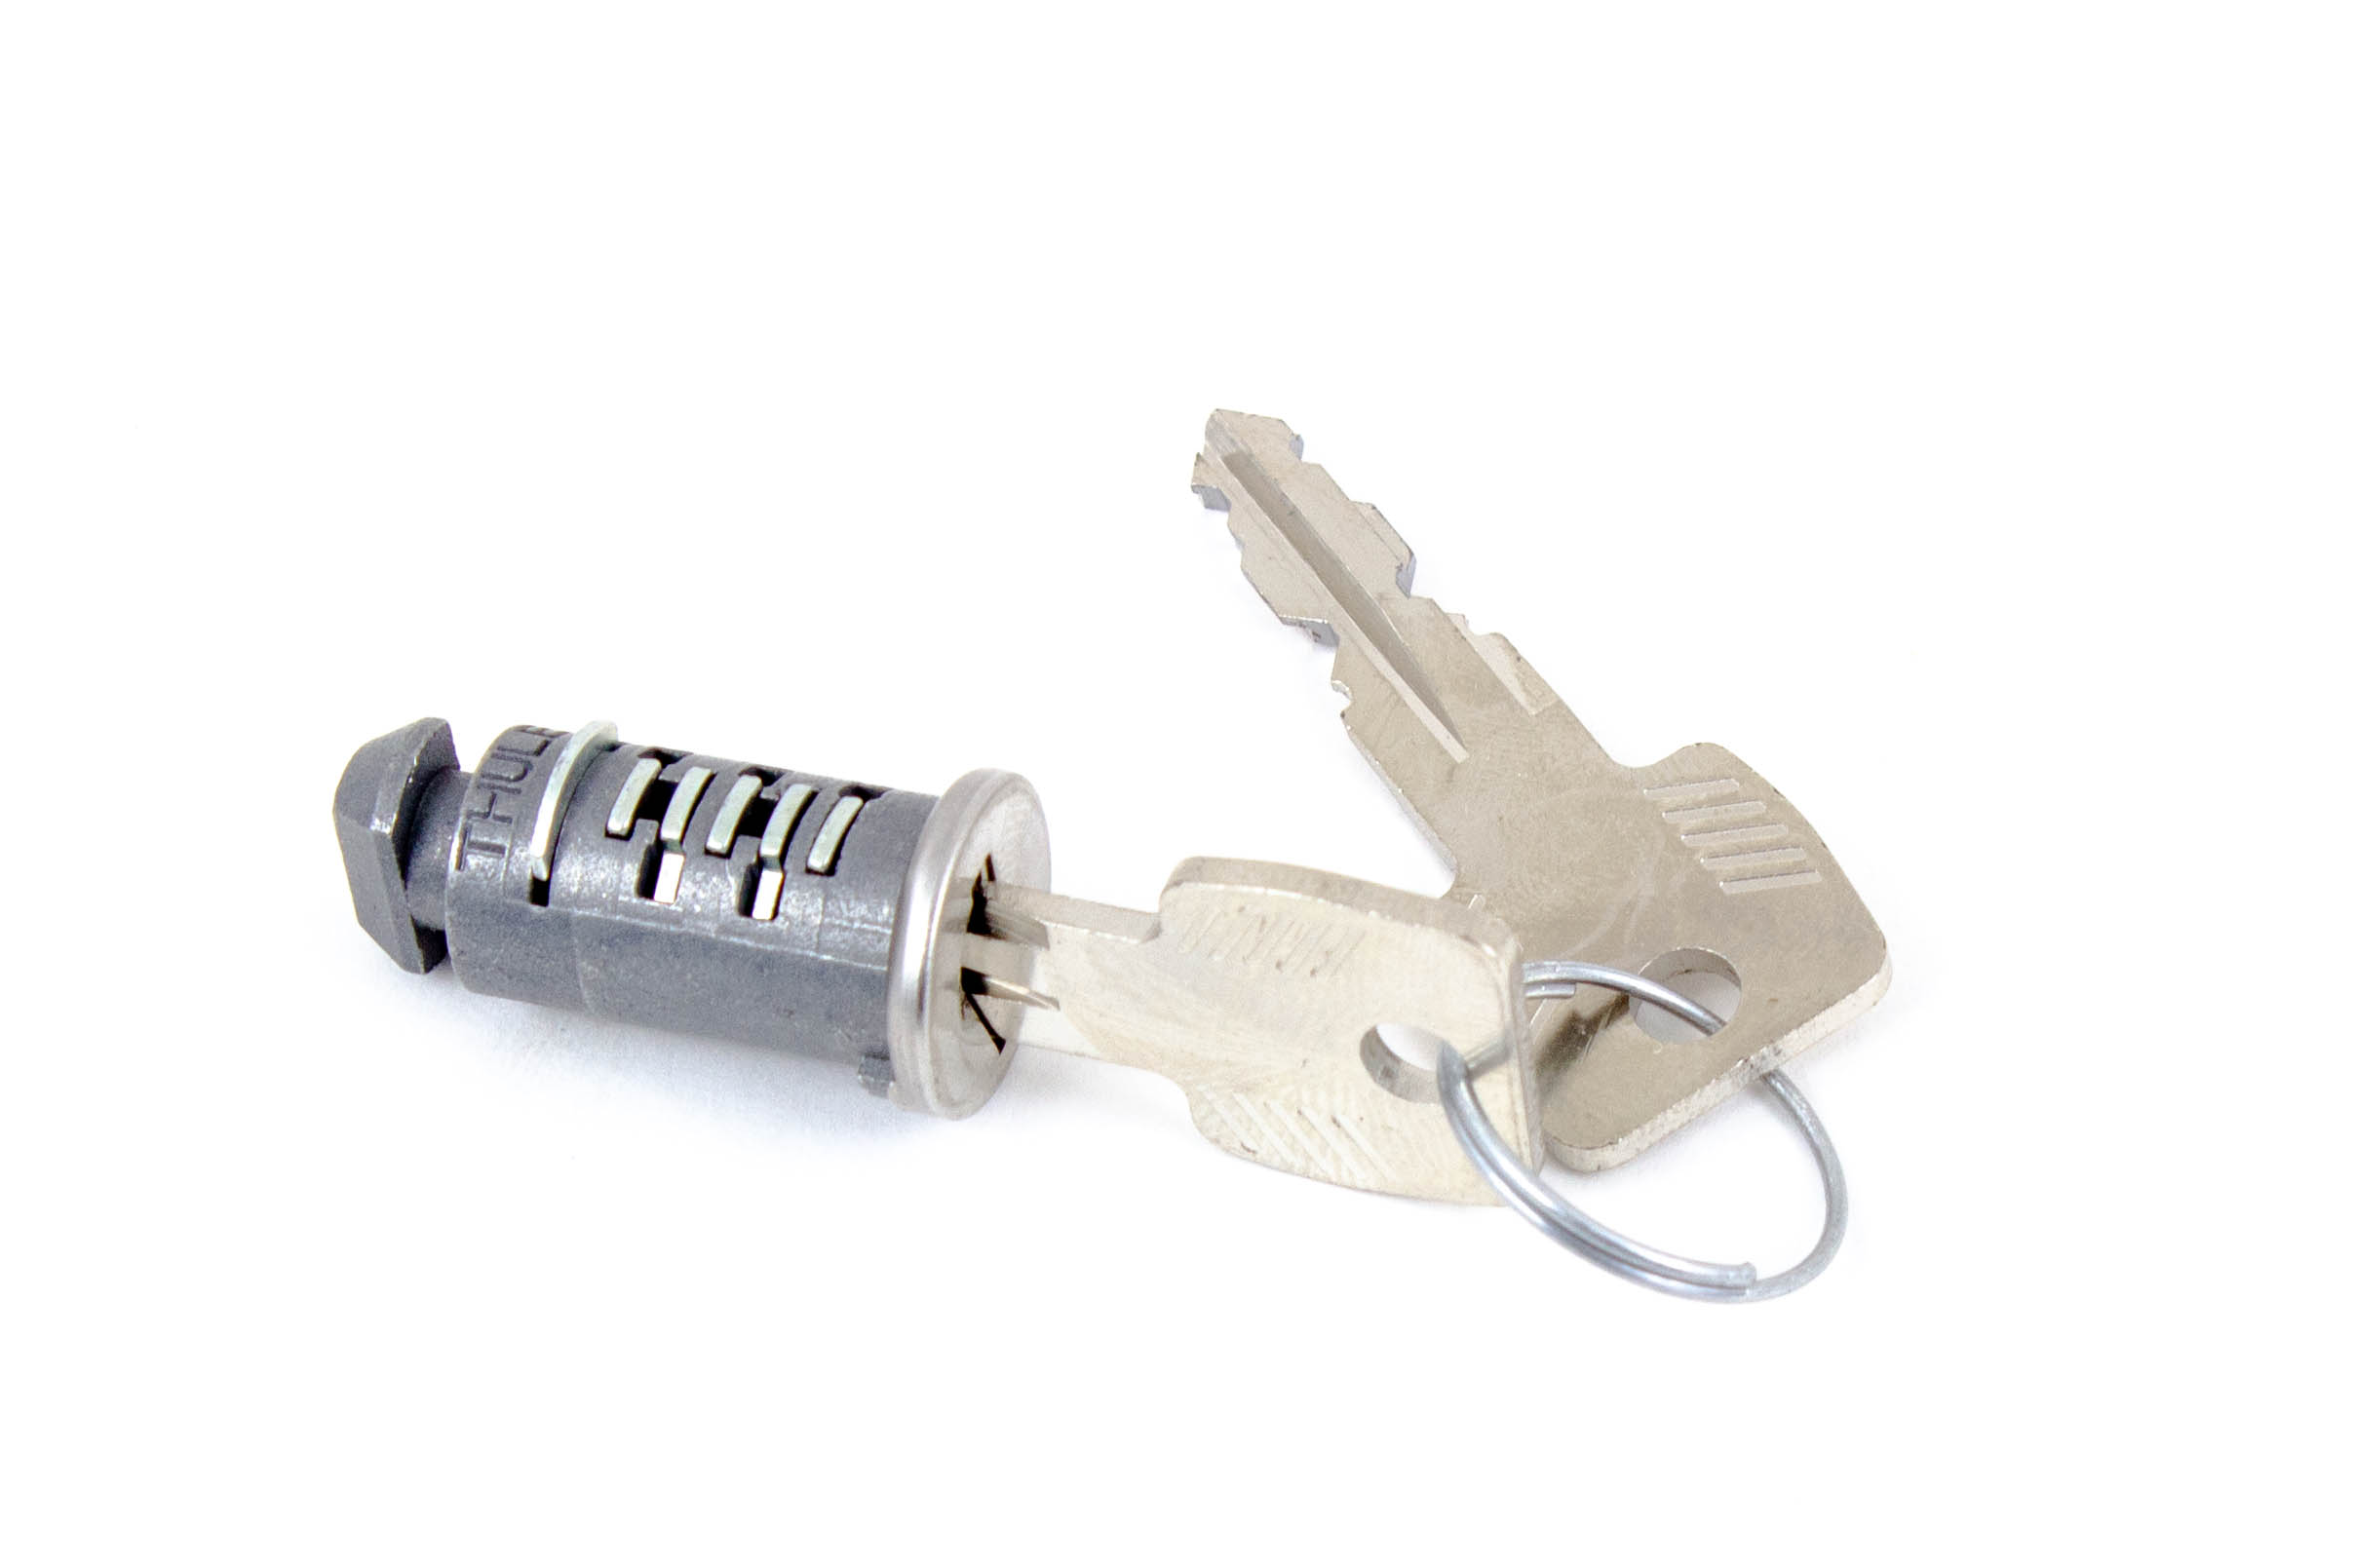 Thule 544  N191 Lock Cylinders 4 cylinder locks with 4 keys and installation key 